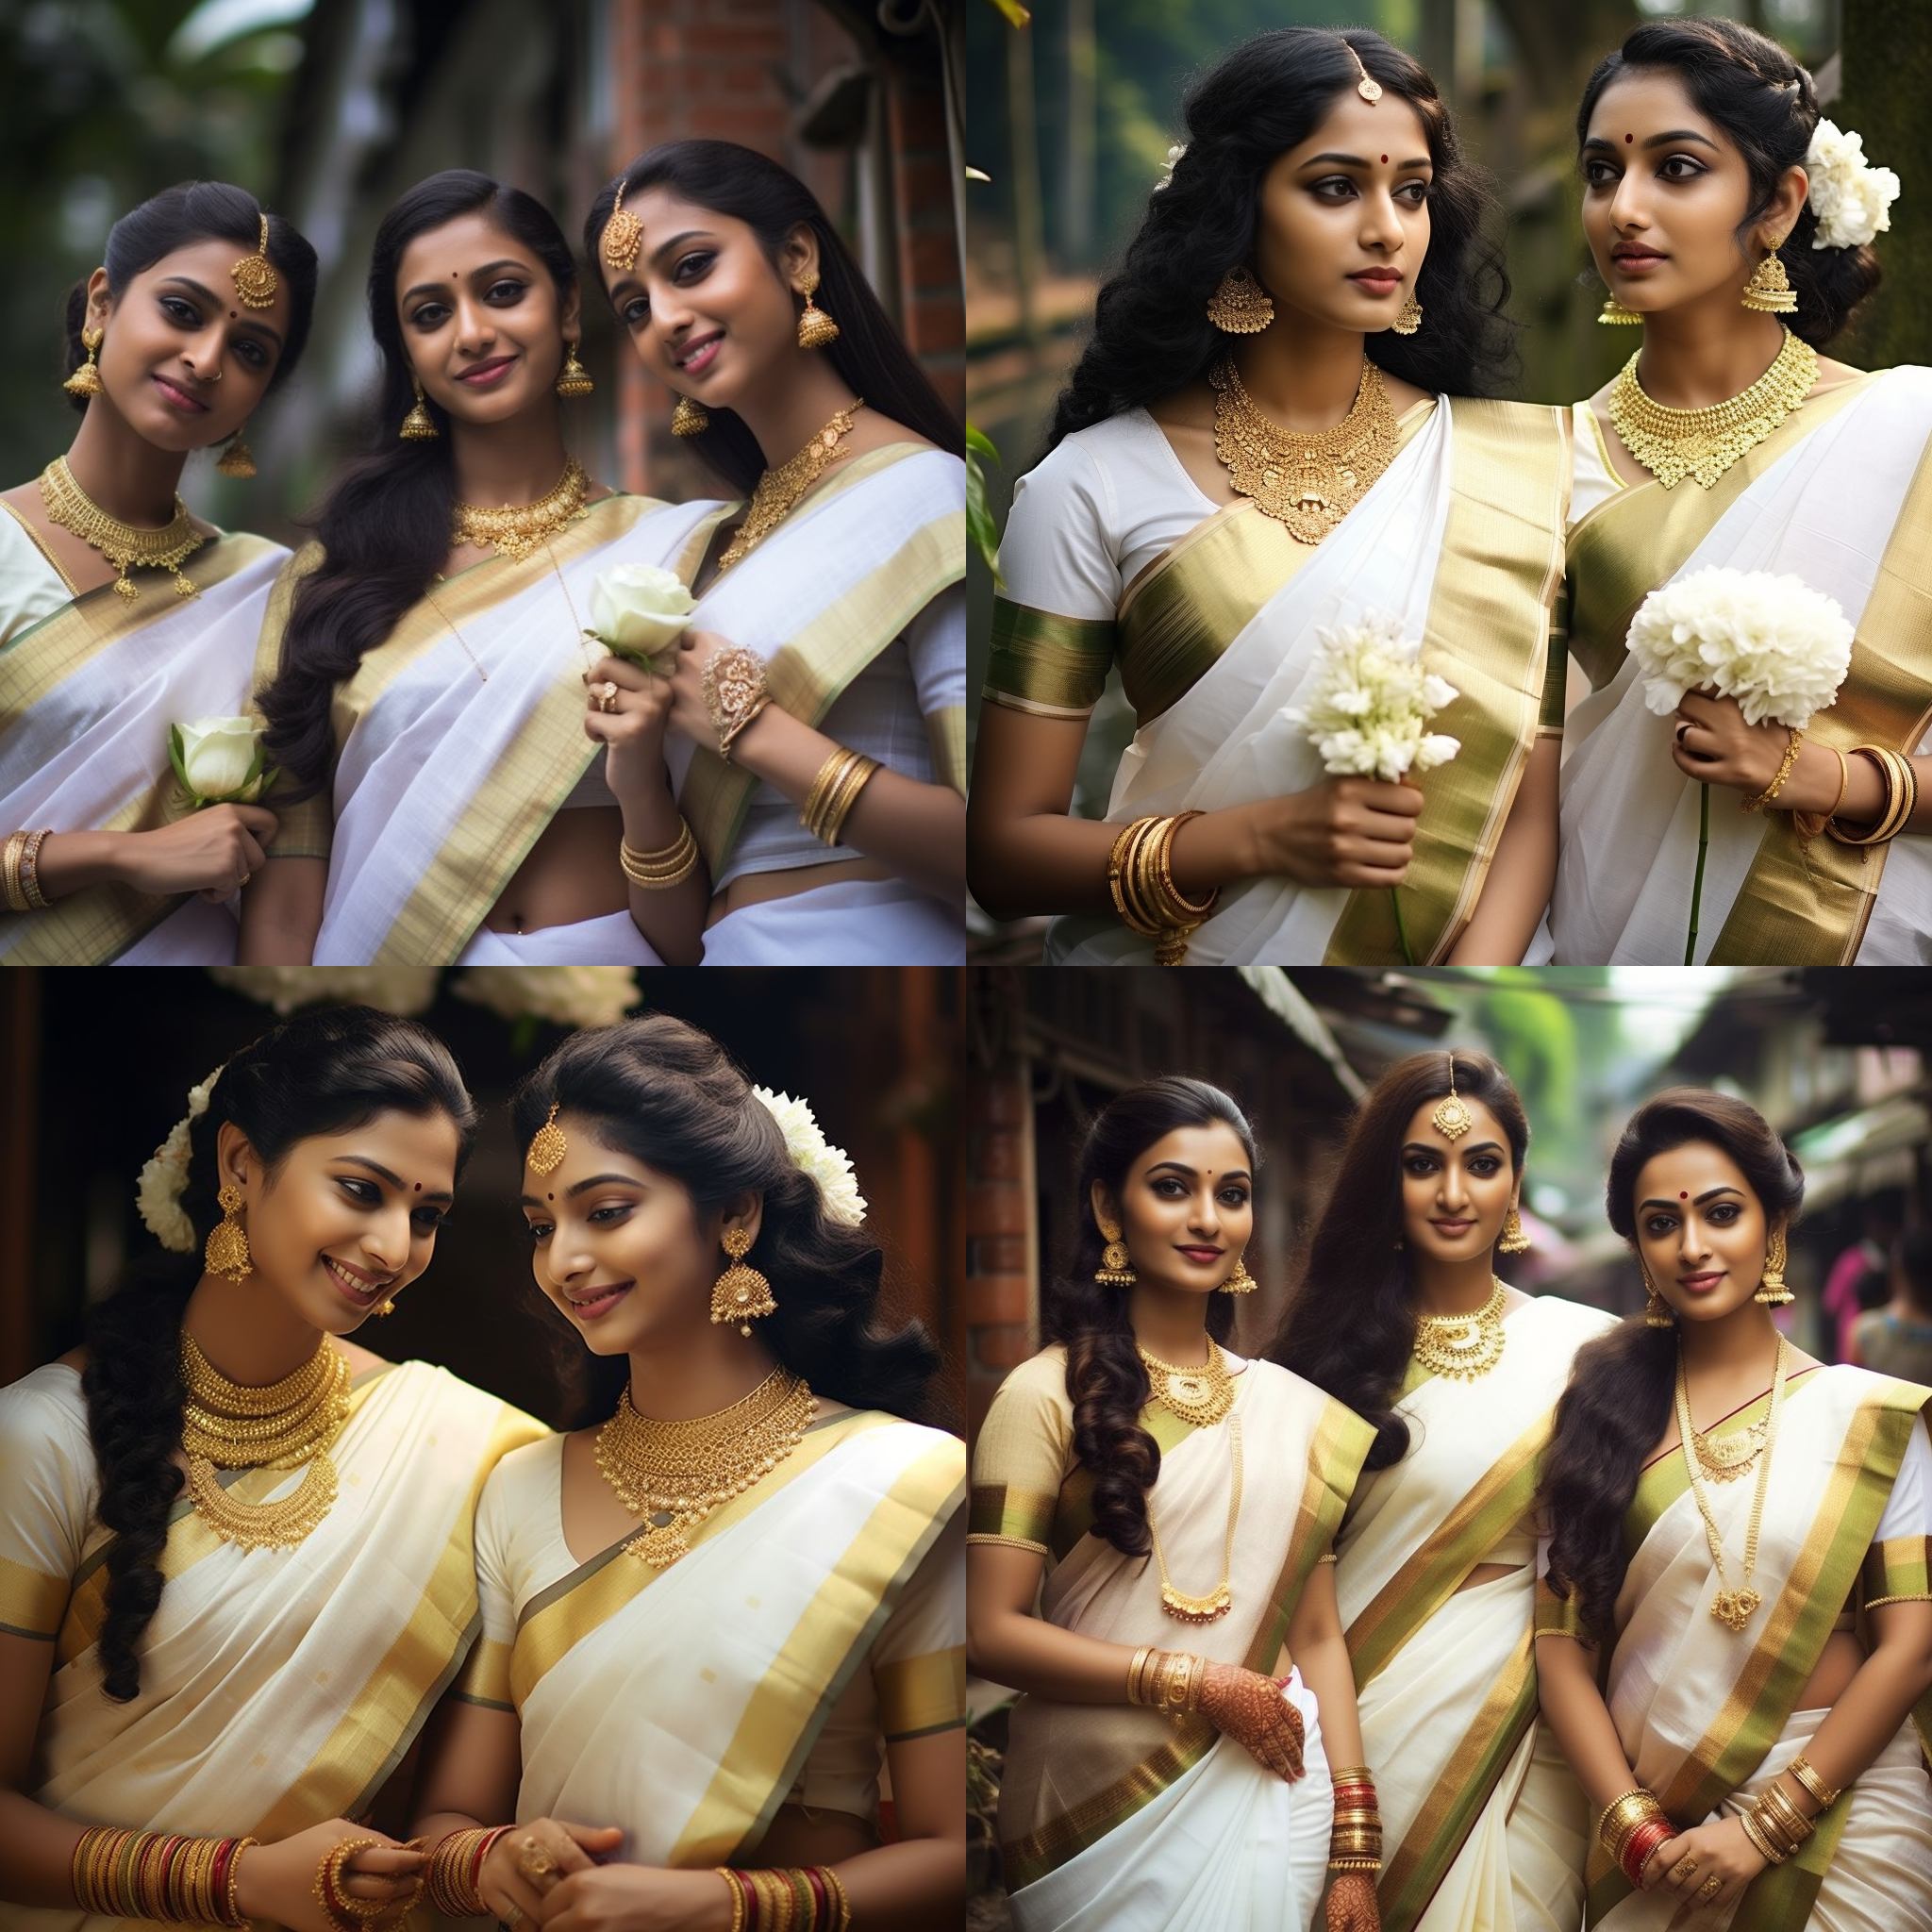 Stock Photos of Kerala Women in Traditional Saree 4